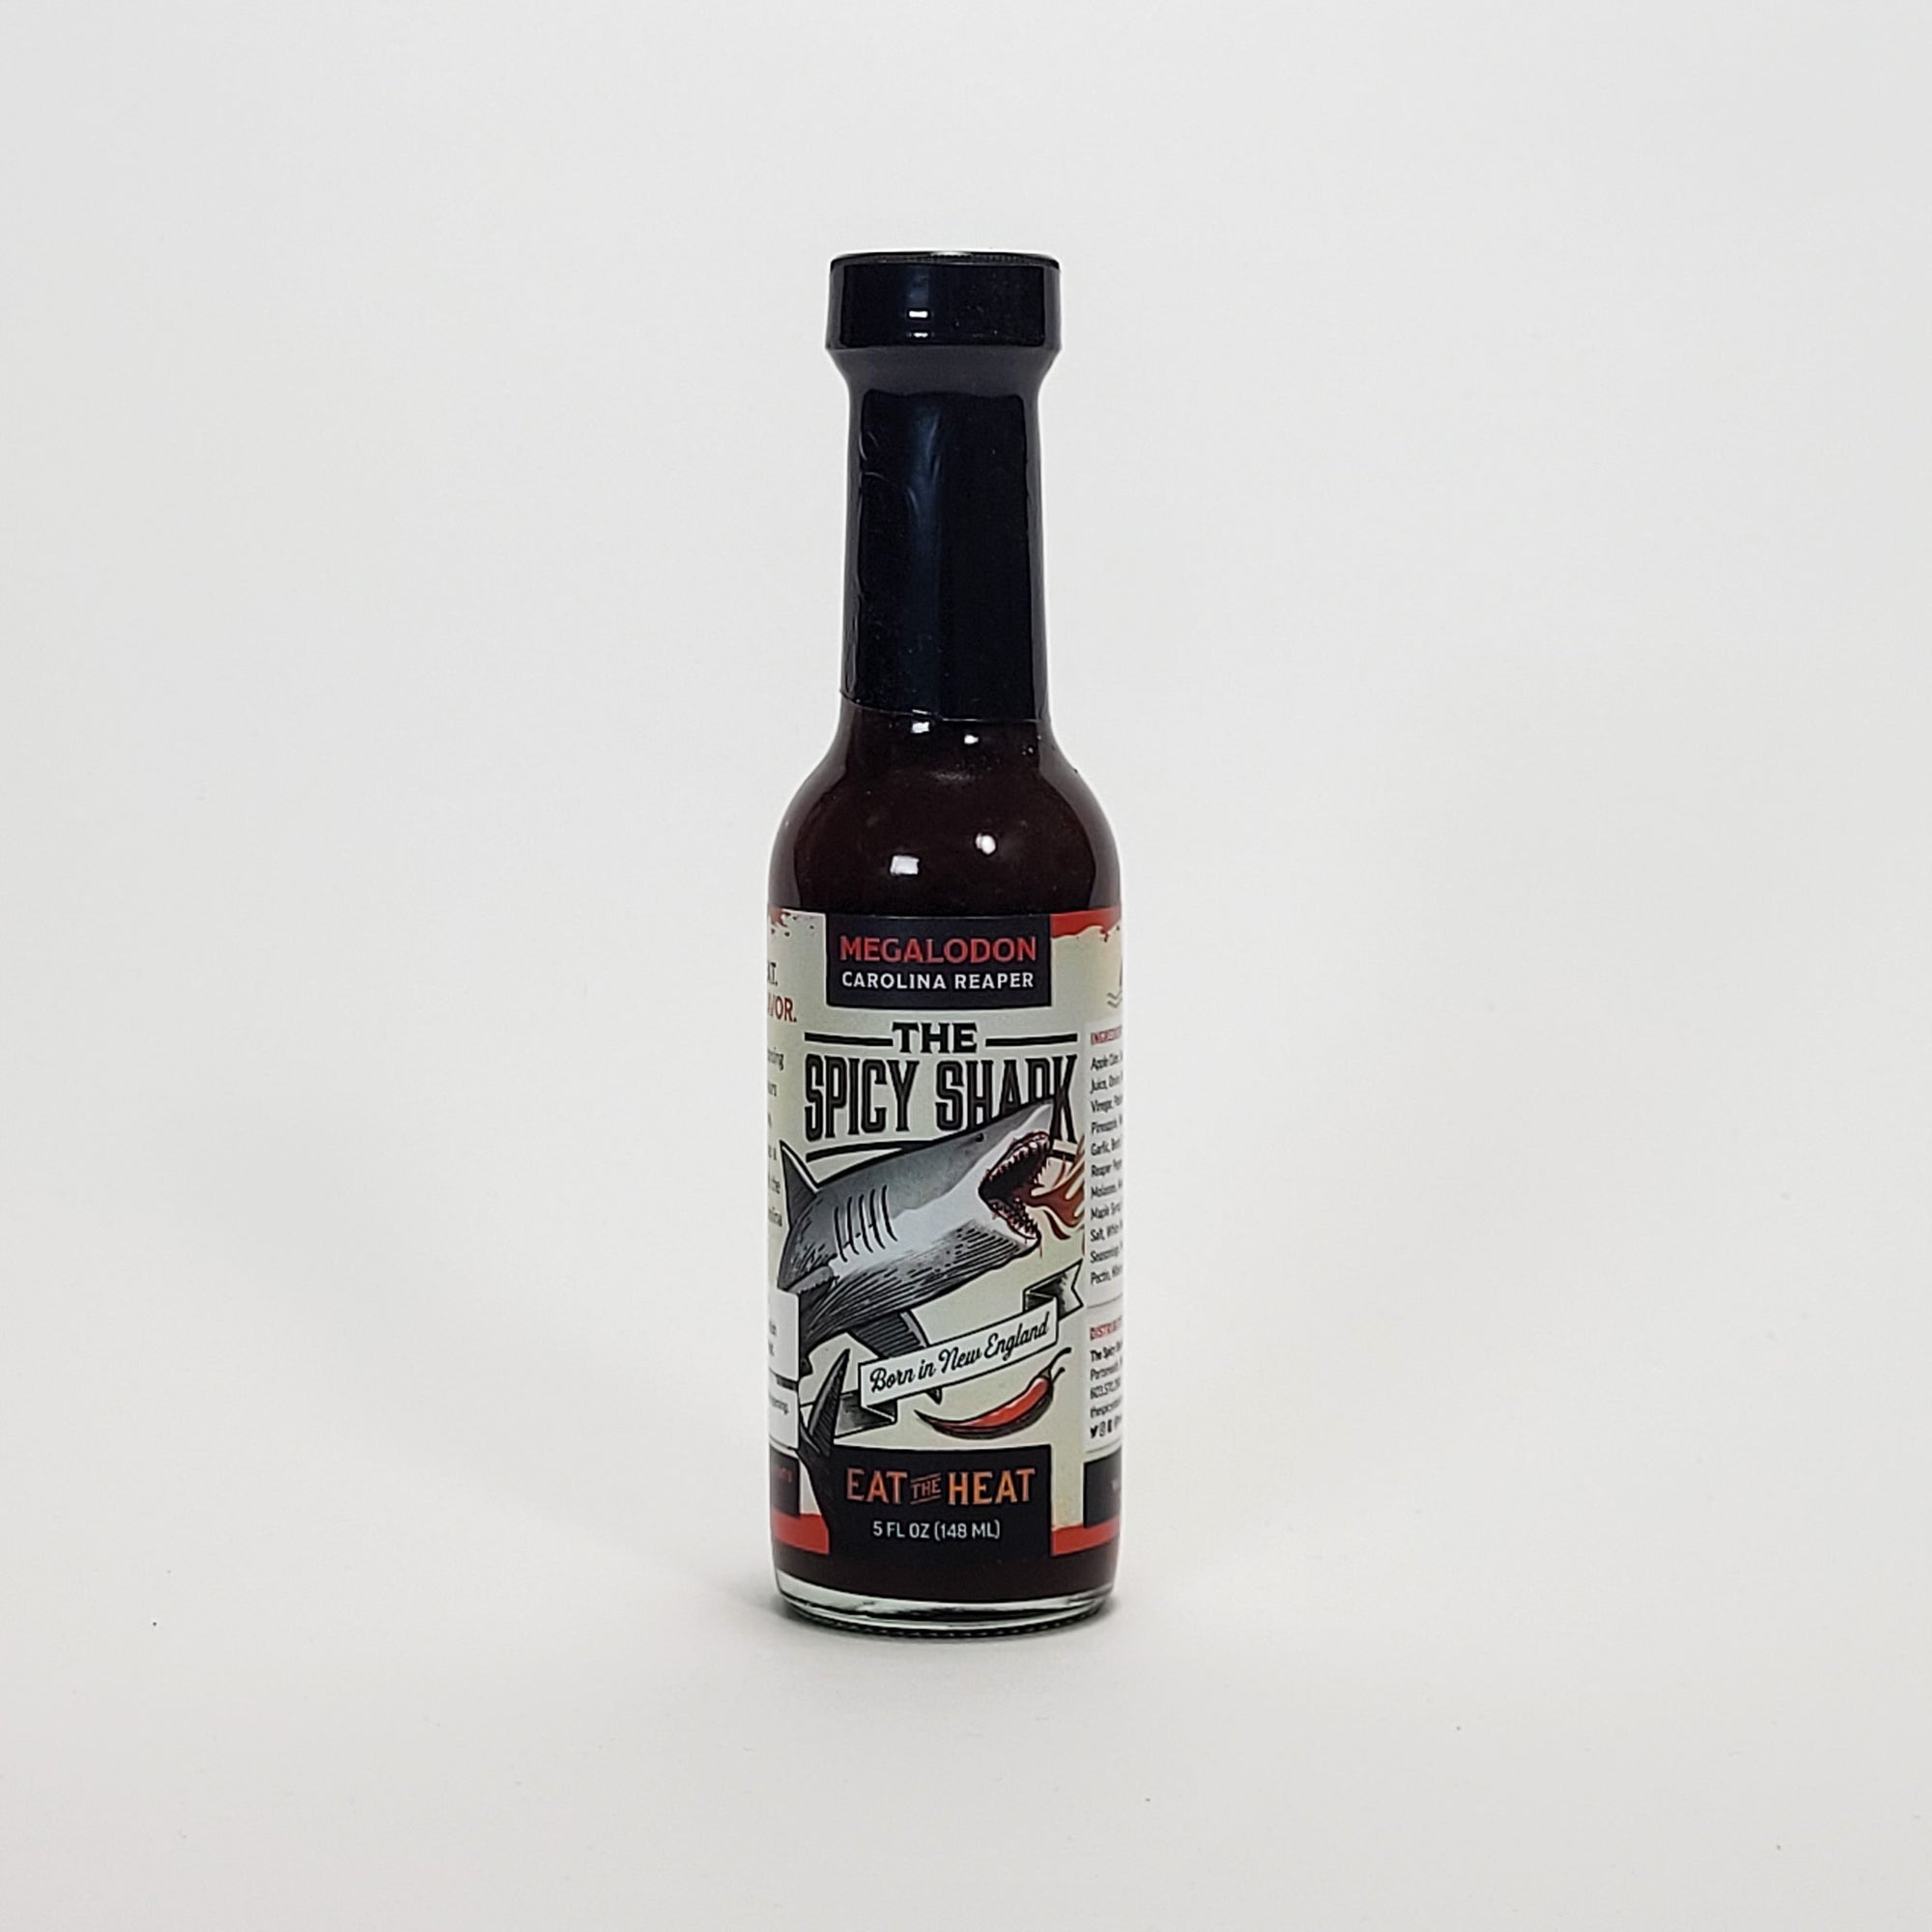 Spicy Shark Megalodon hot sauce